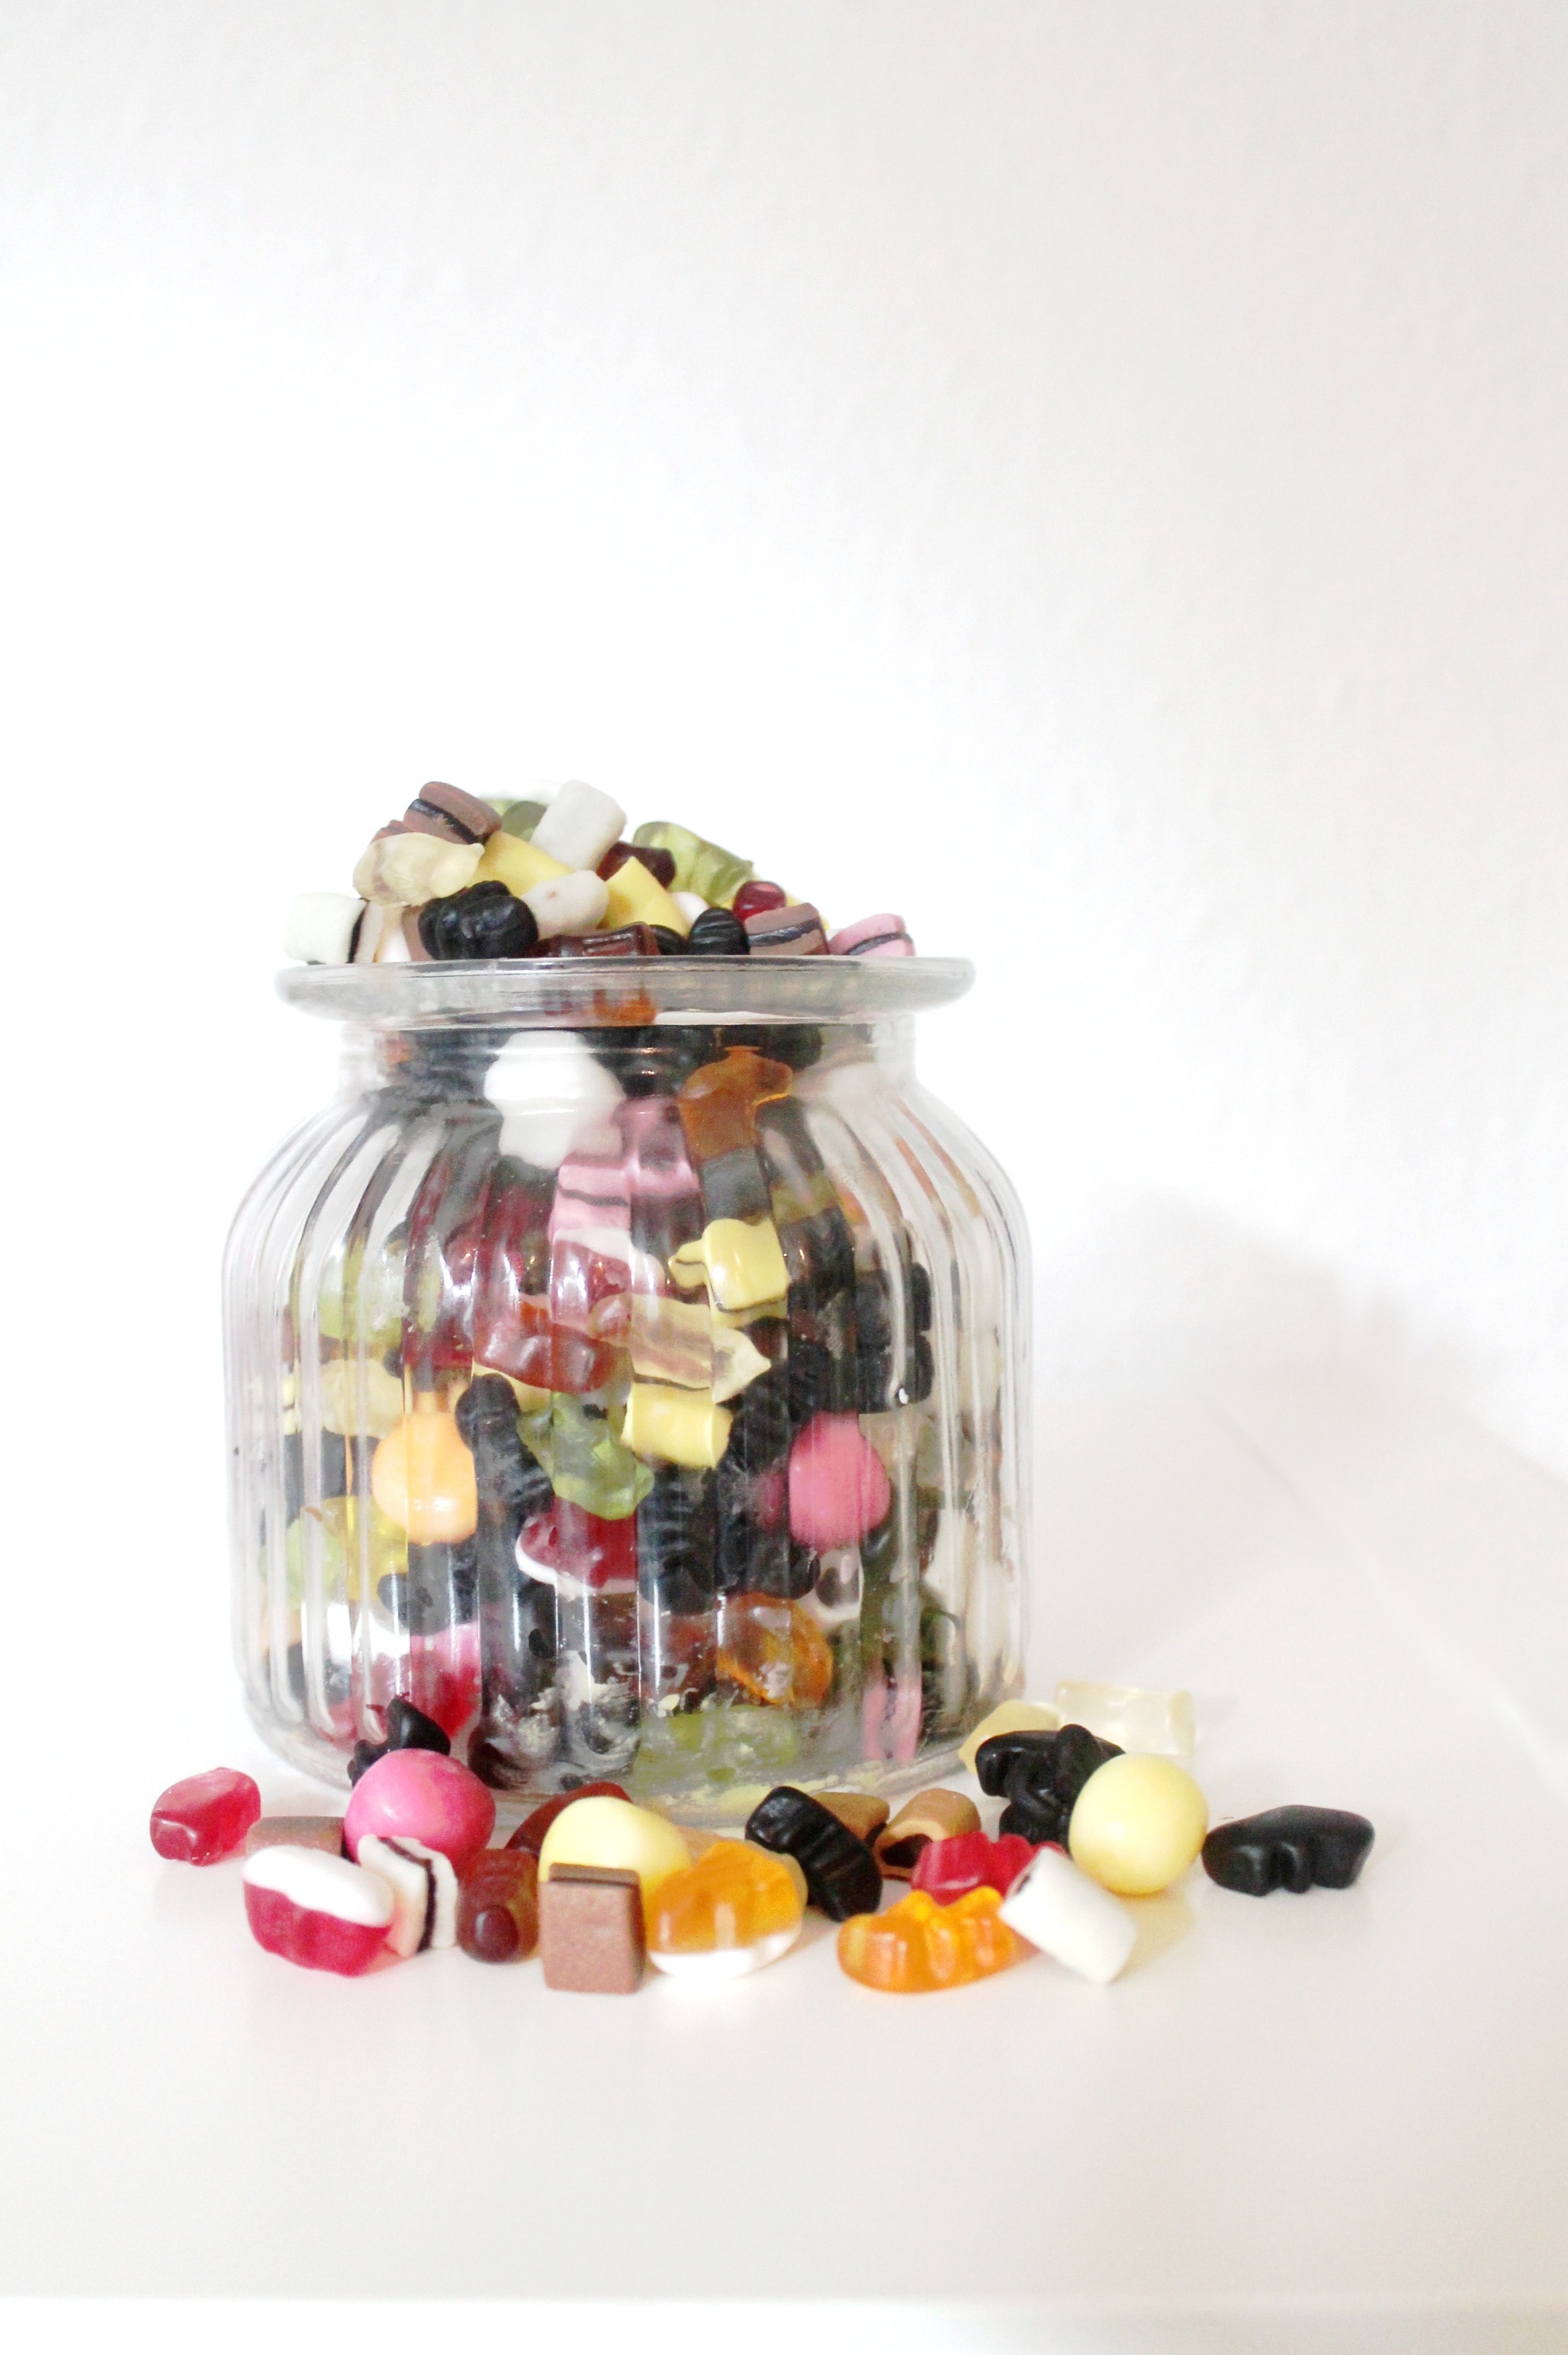 candies in clear glass jar